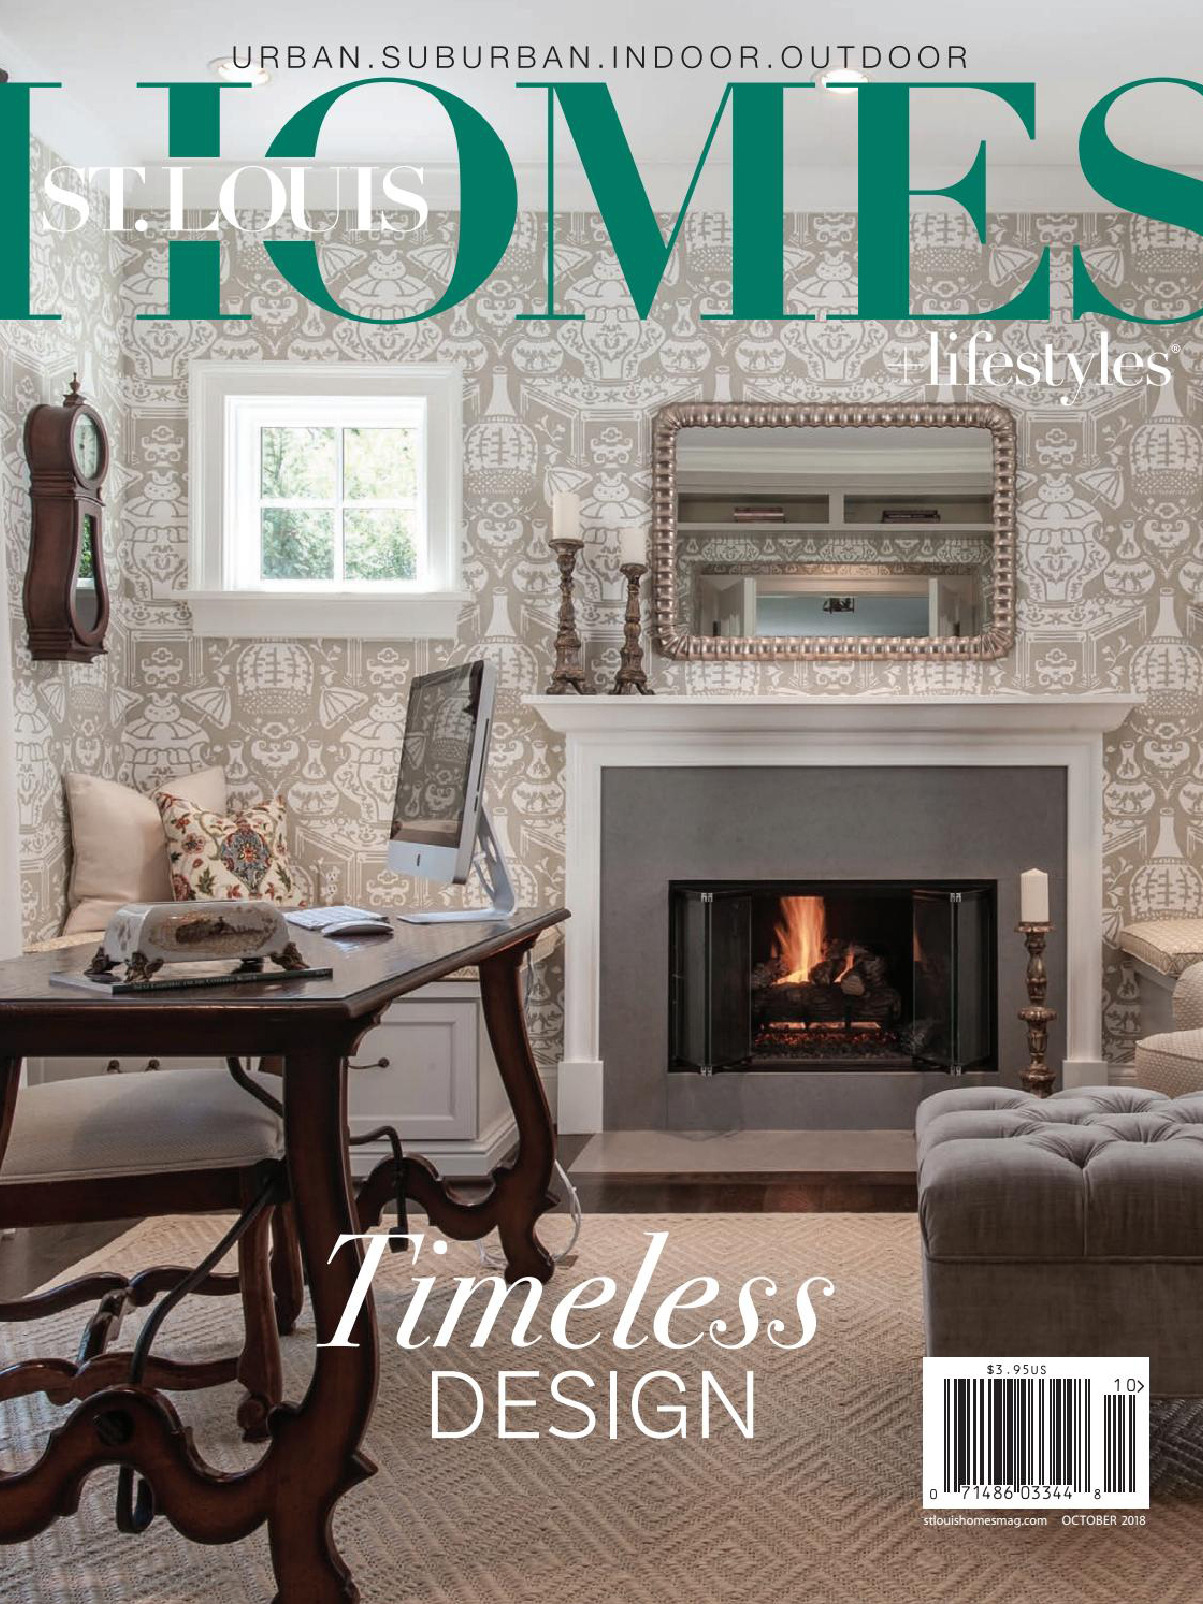 《St. Louis Homes & Lifestyles》美国版时尚家居生活杂志2018年10月号